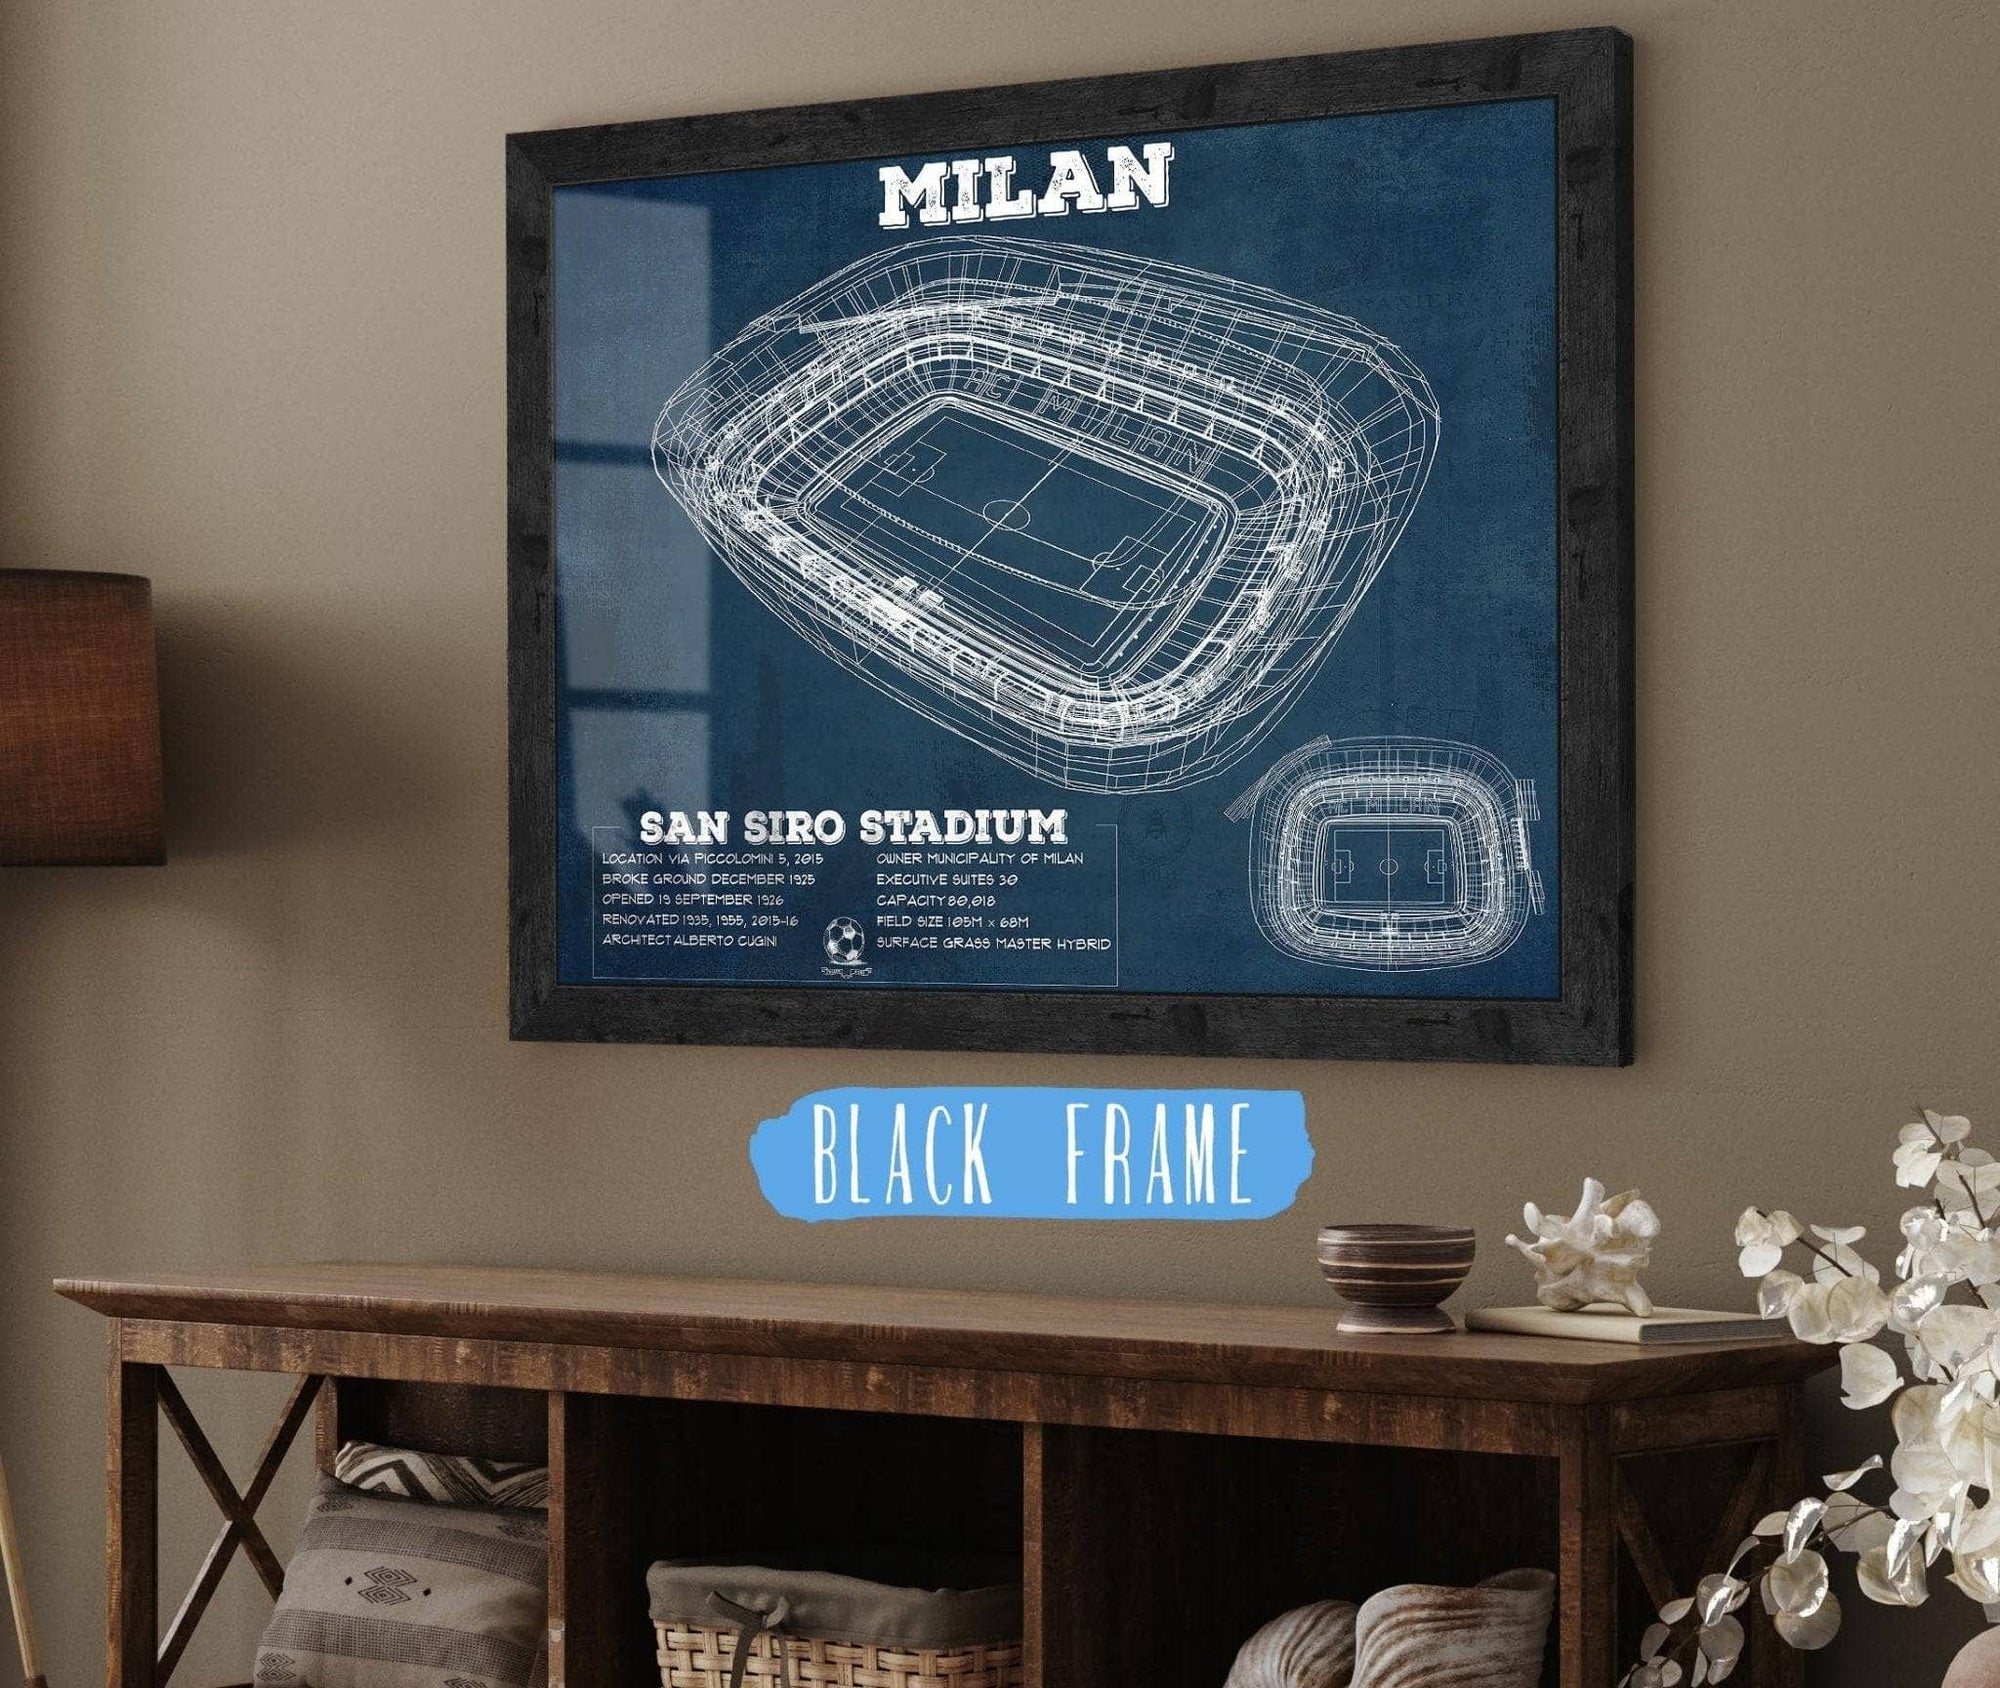 Cutler West Soccer Collection 14" x 11" / Black Frame AC Milan San Siro Stadium Soccer Print 735408000-TOP_39102